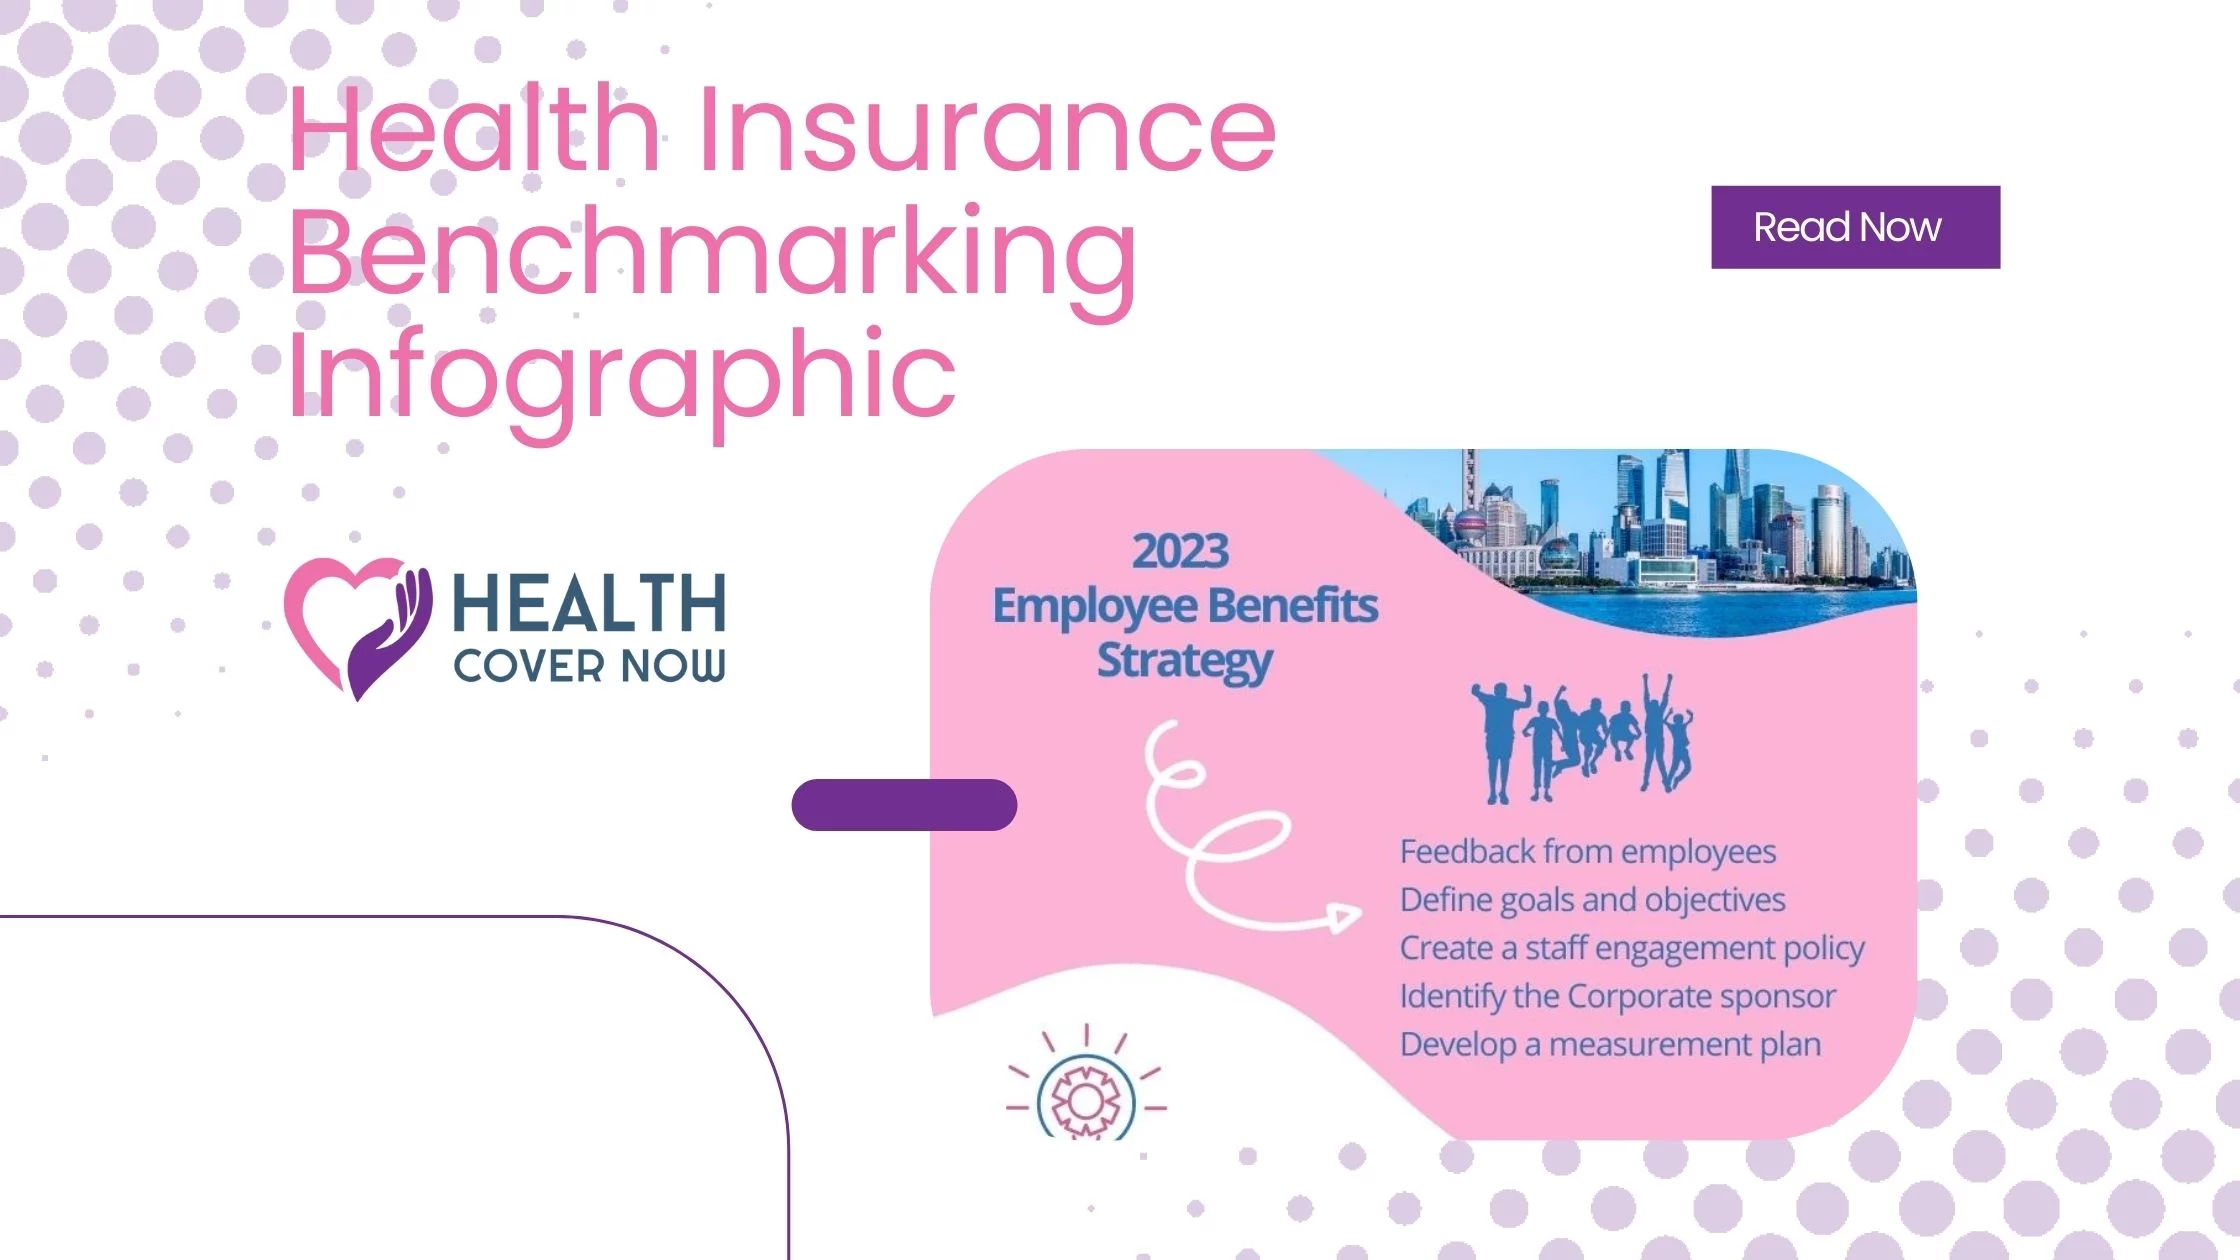 Health Insurance benchmarking